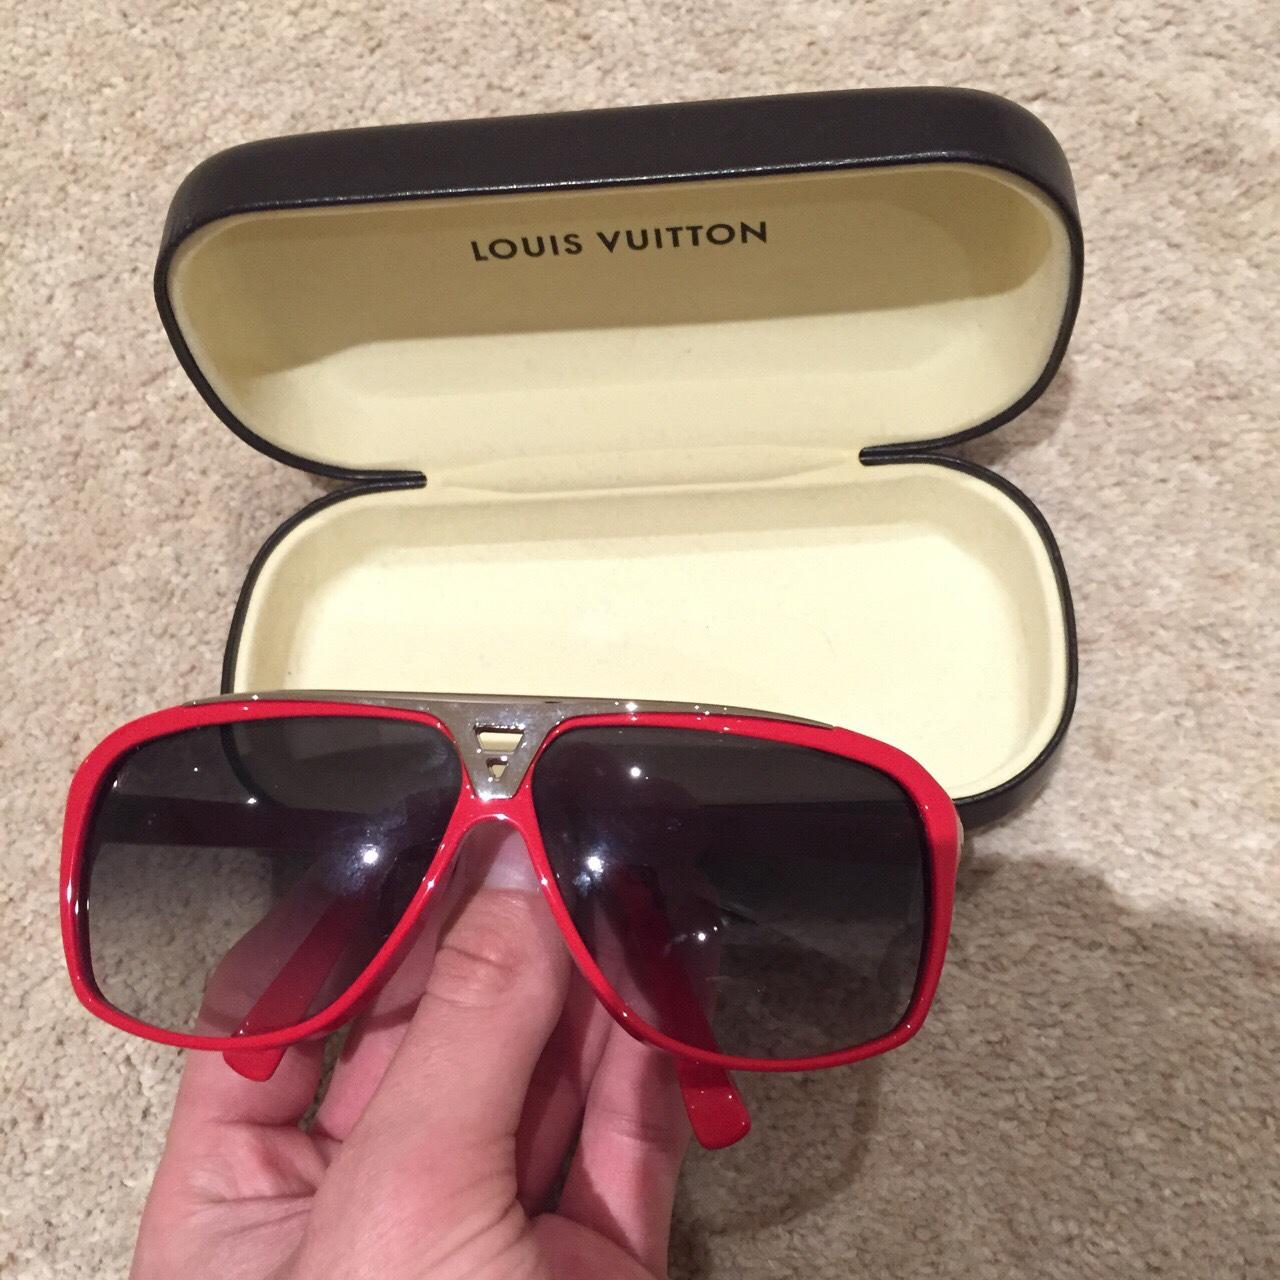 Louis Vuitton Cyclone Red - Depop